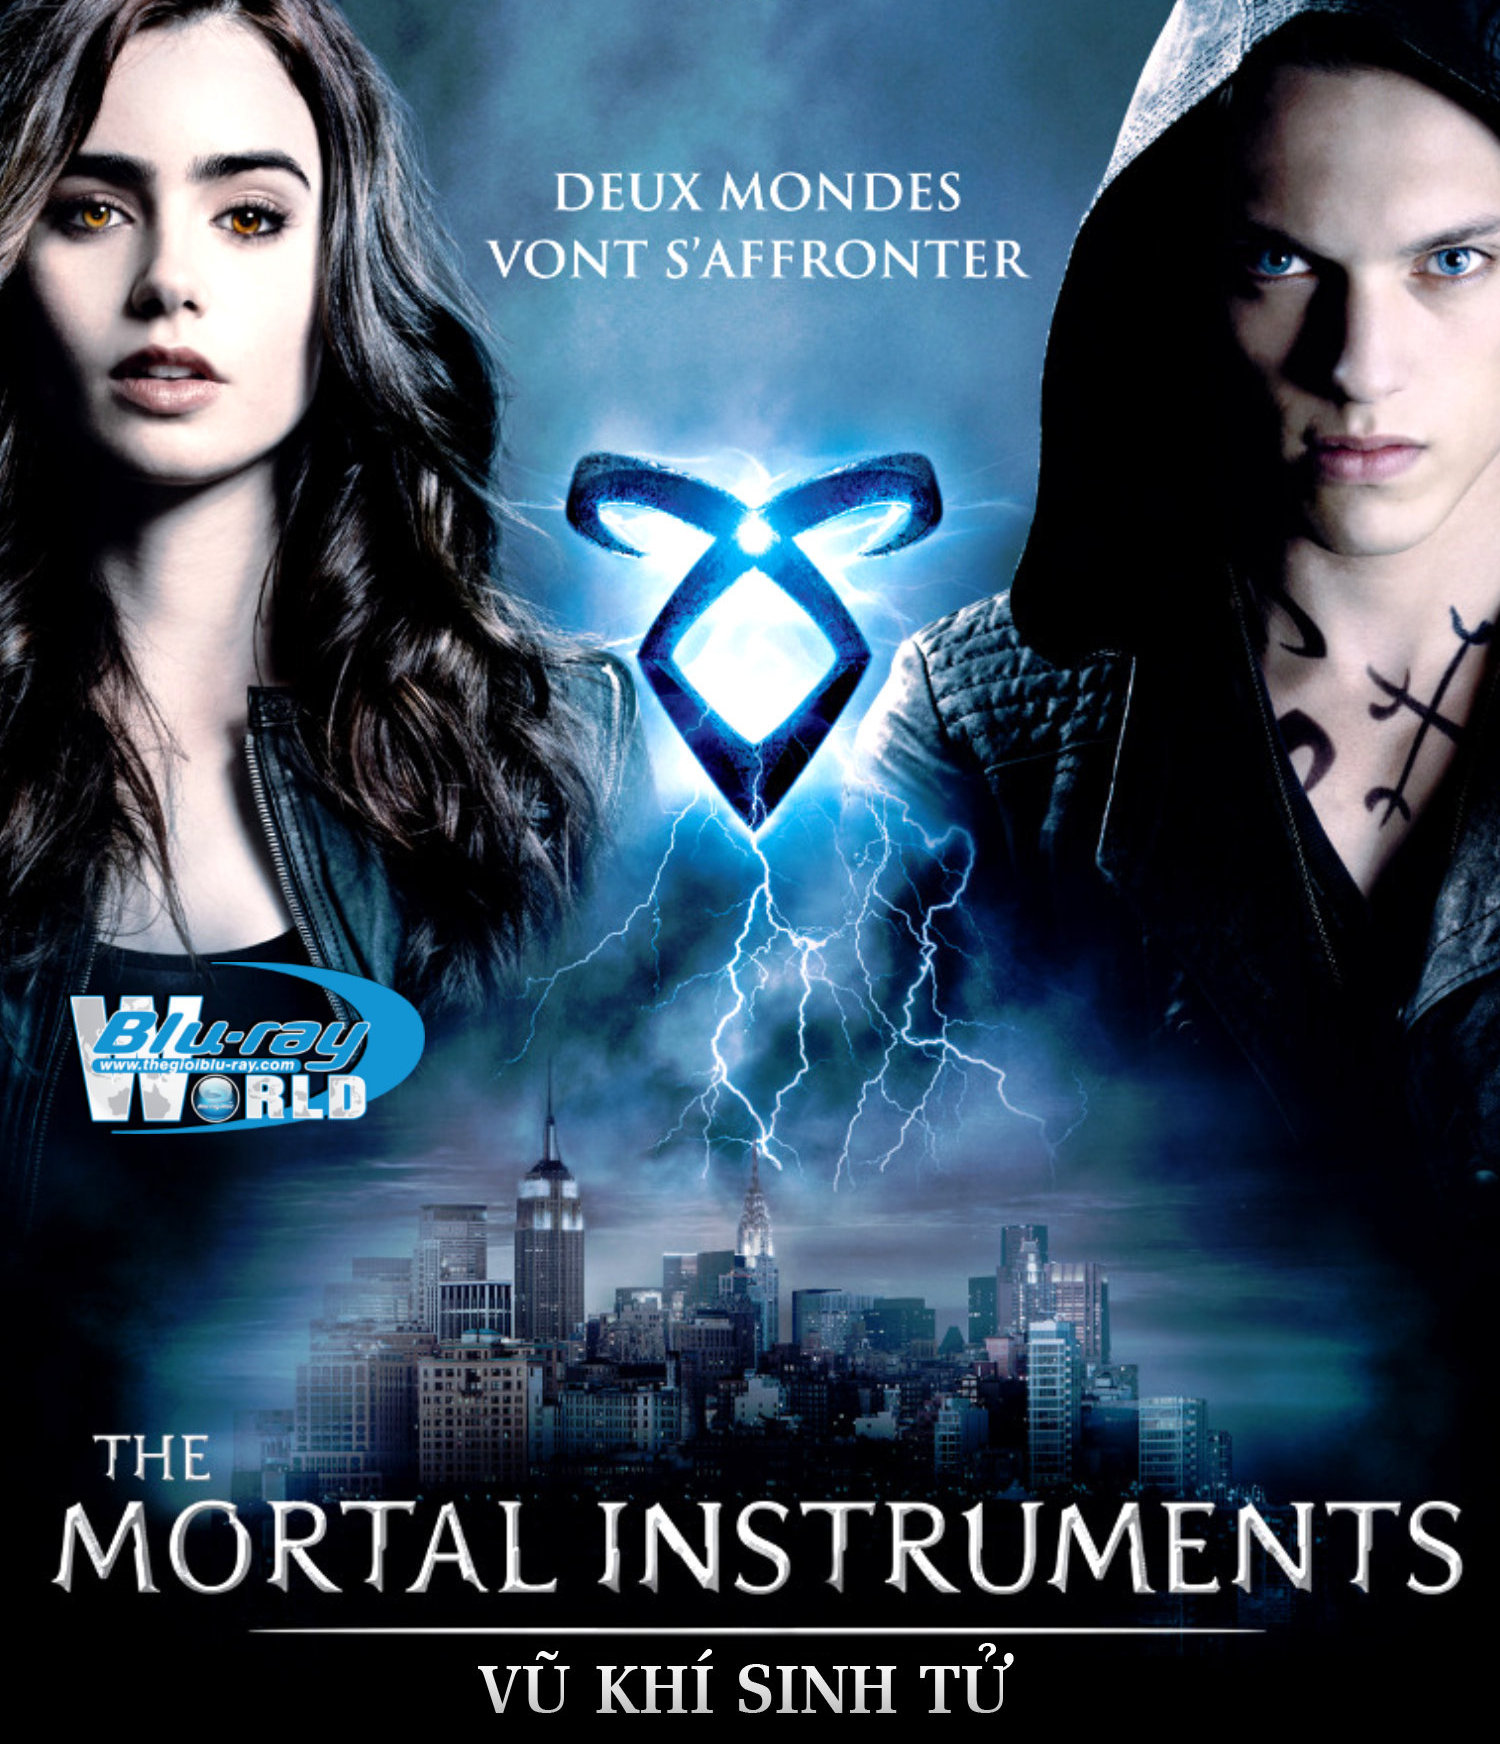 B1459. The Mortal Instruments City Of Bones (no cinavia) - VŨ KHÍ SINH TỬ USA 2D 25G (DTS-HD MA 5.1) nocinavia